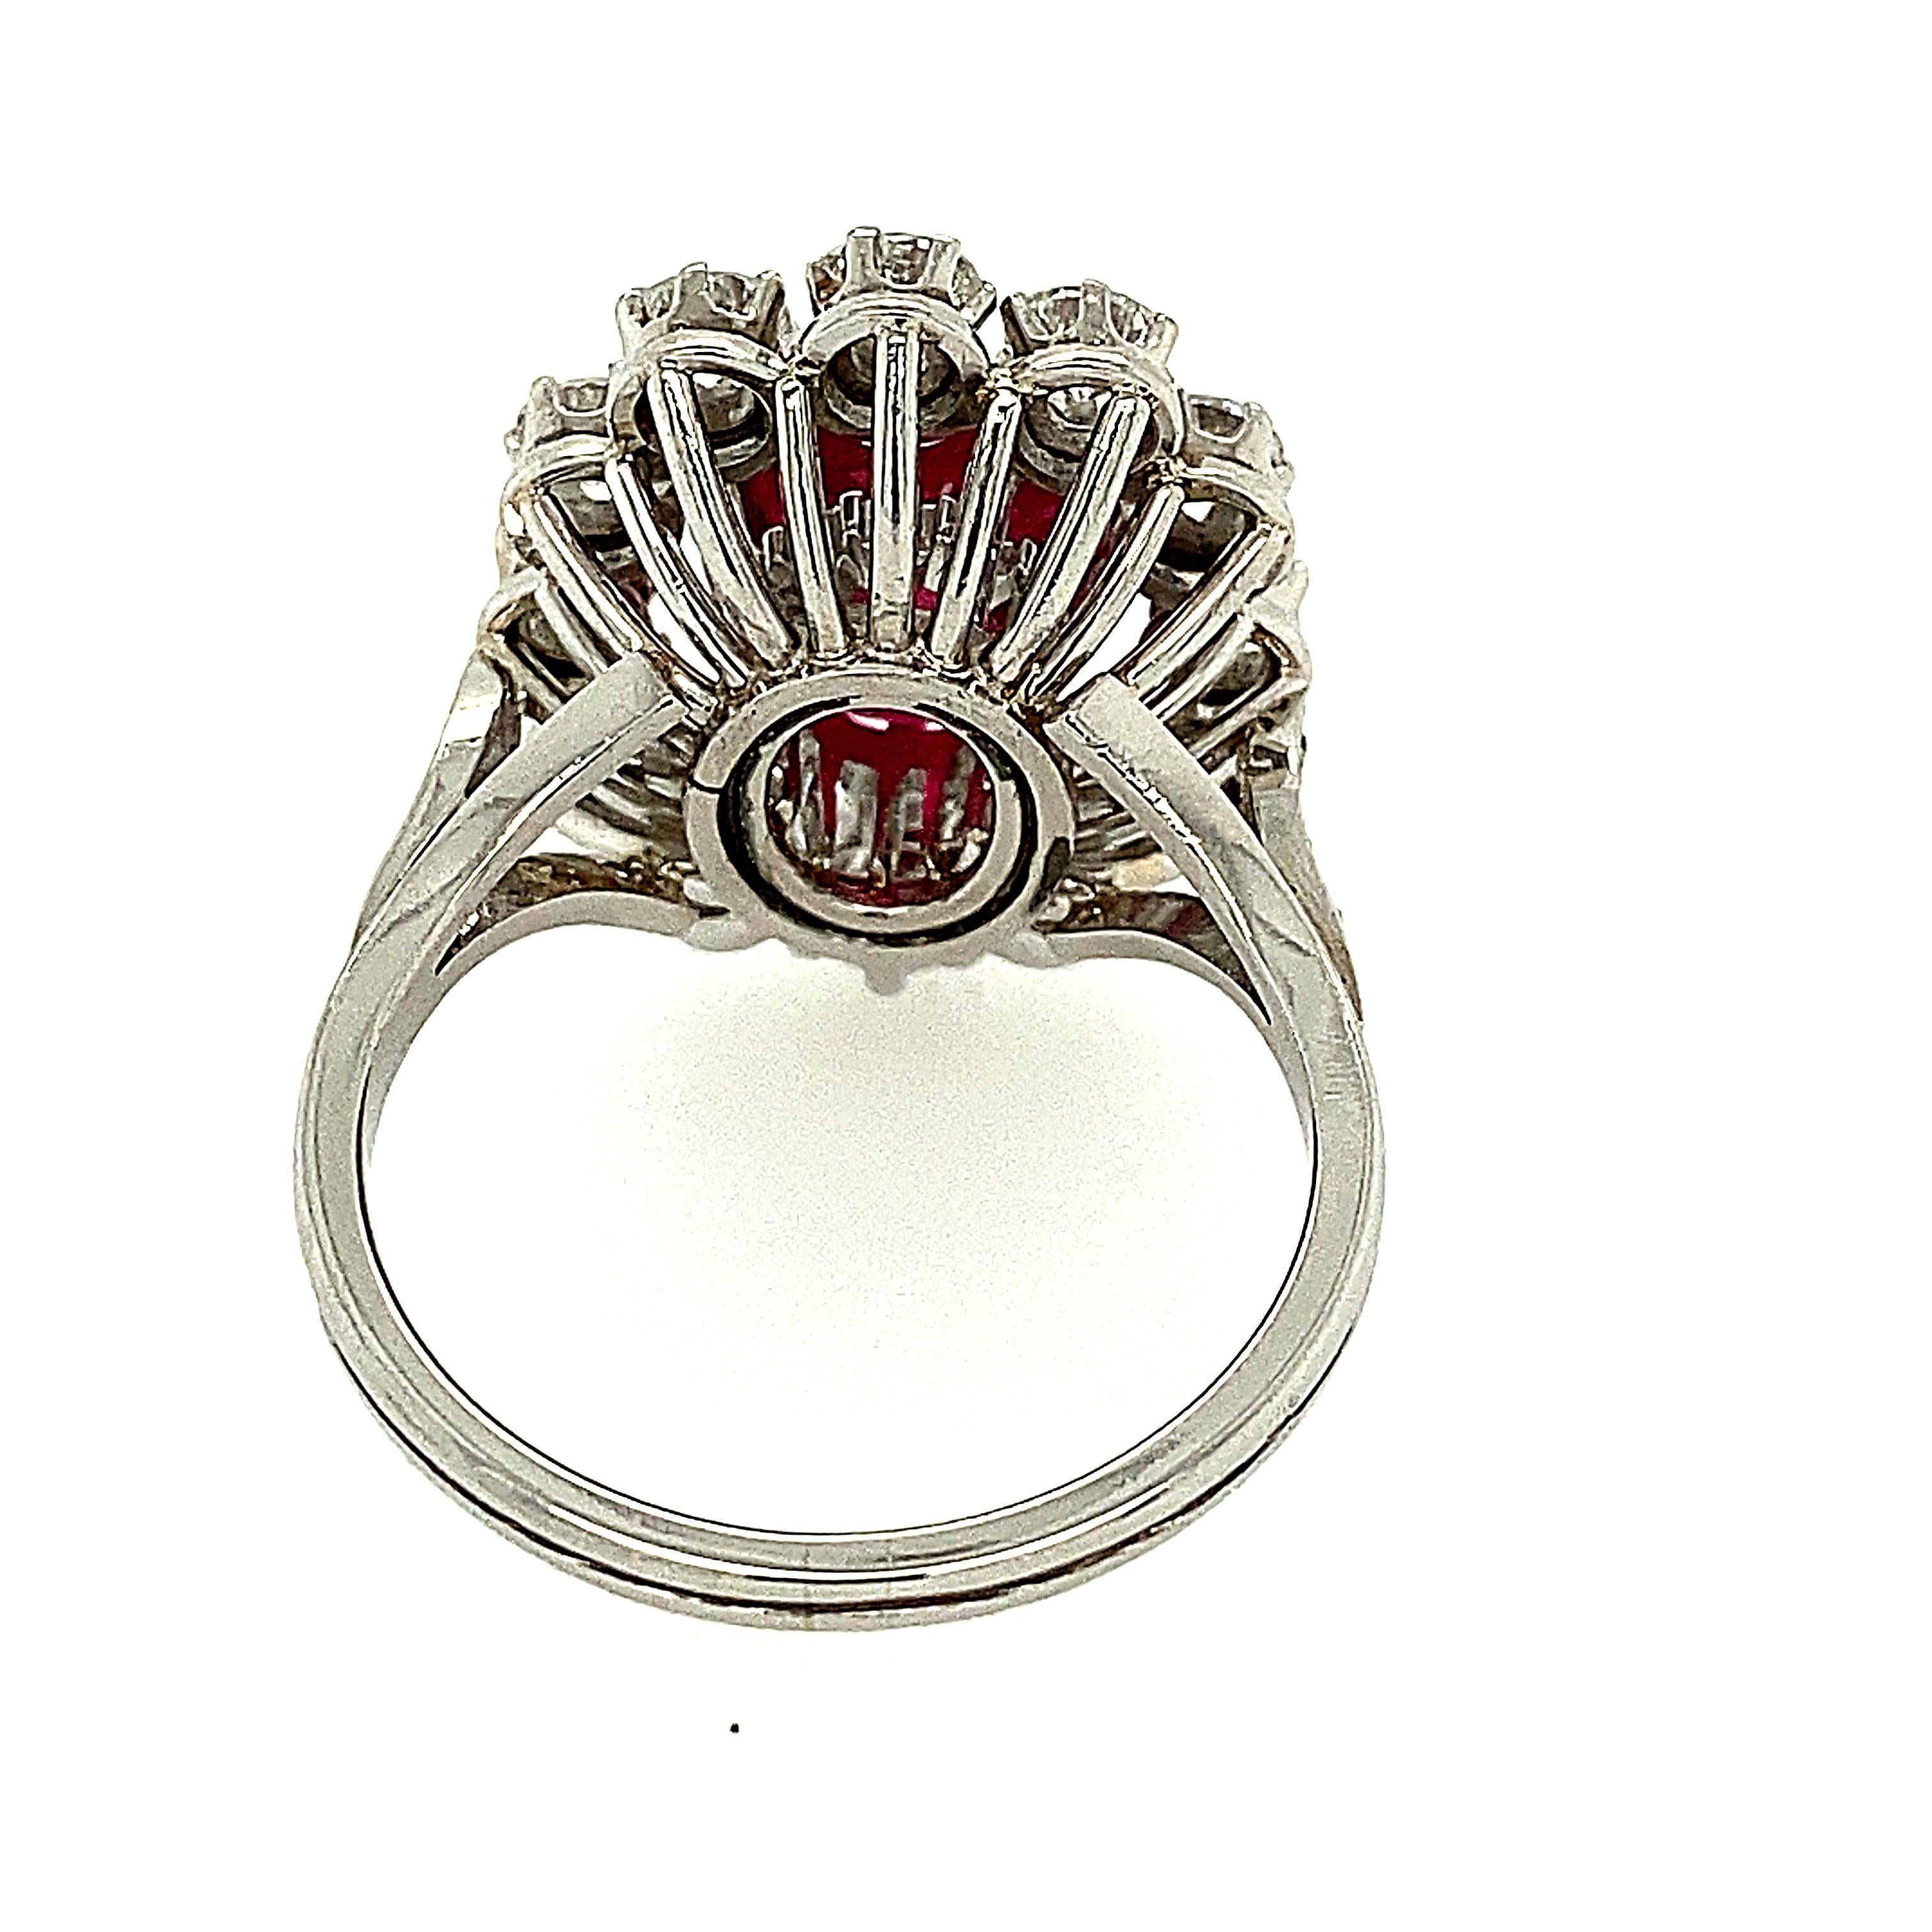 Oval Cut Burma Ruby and Diamond Ring